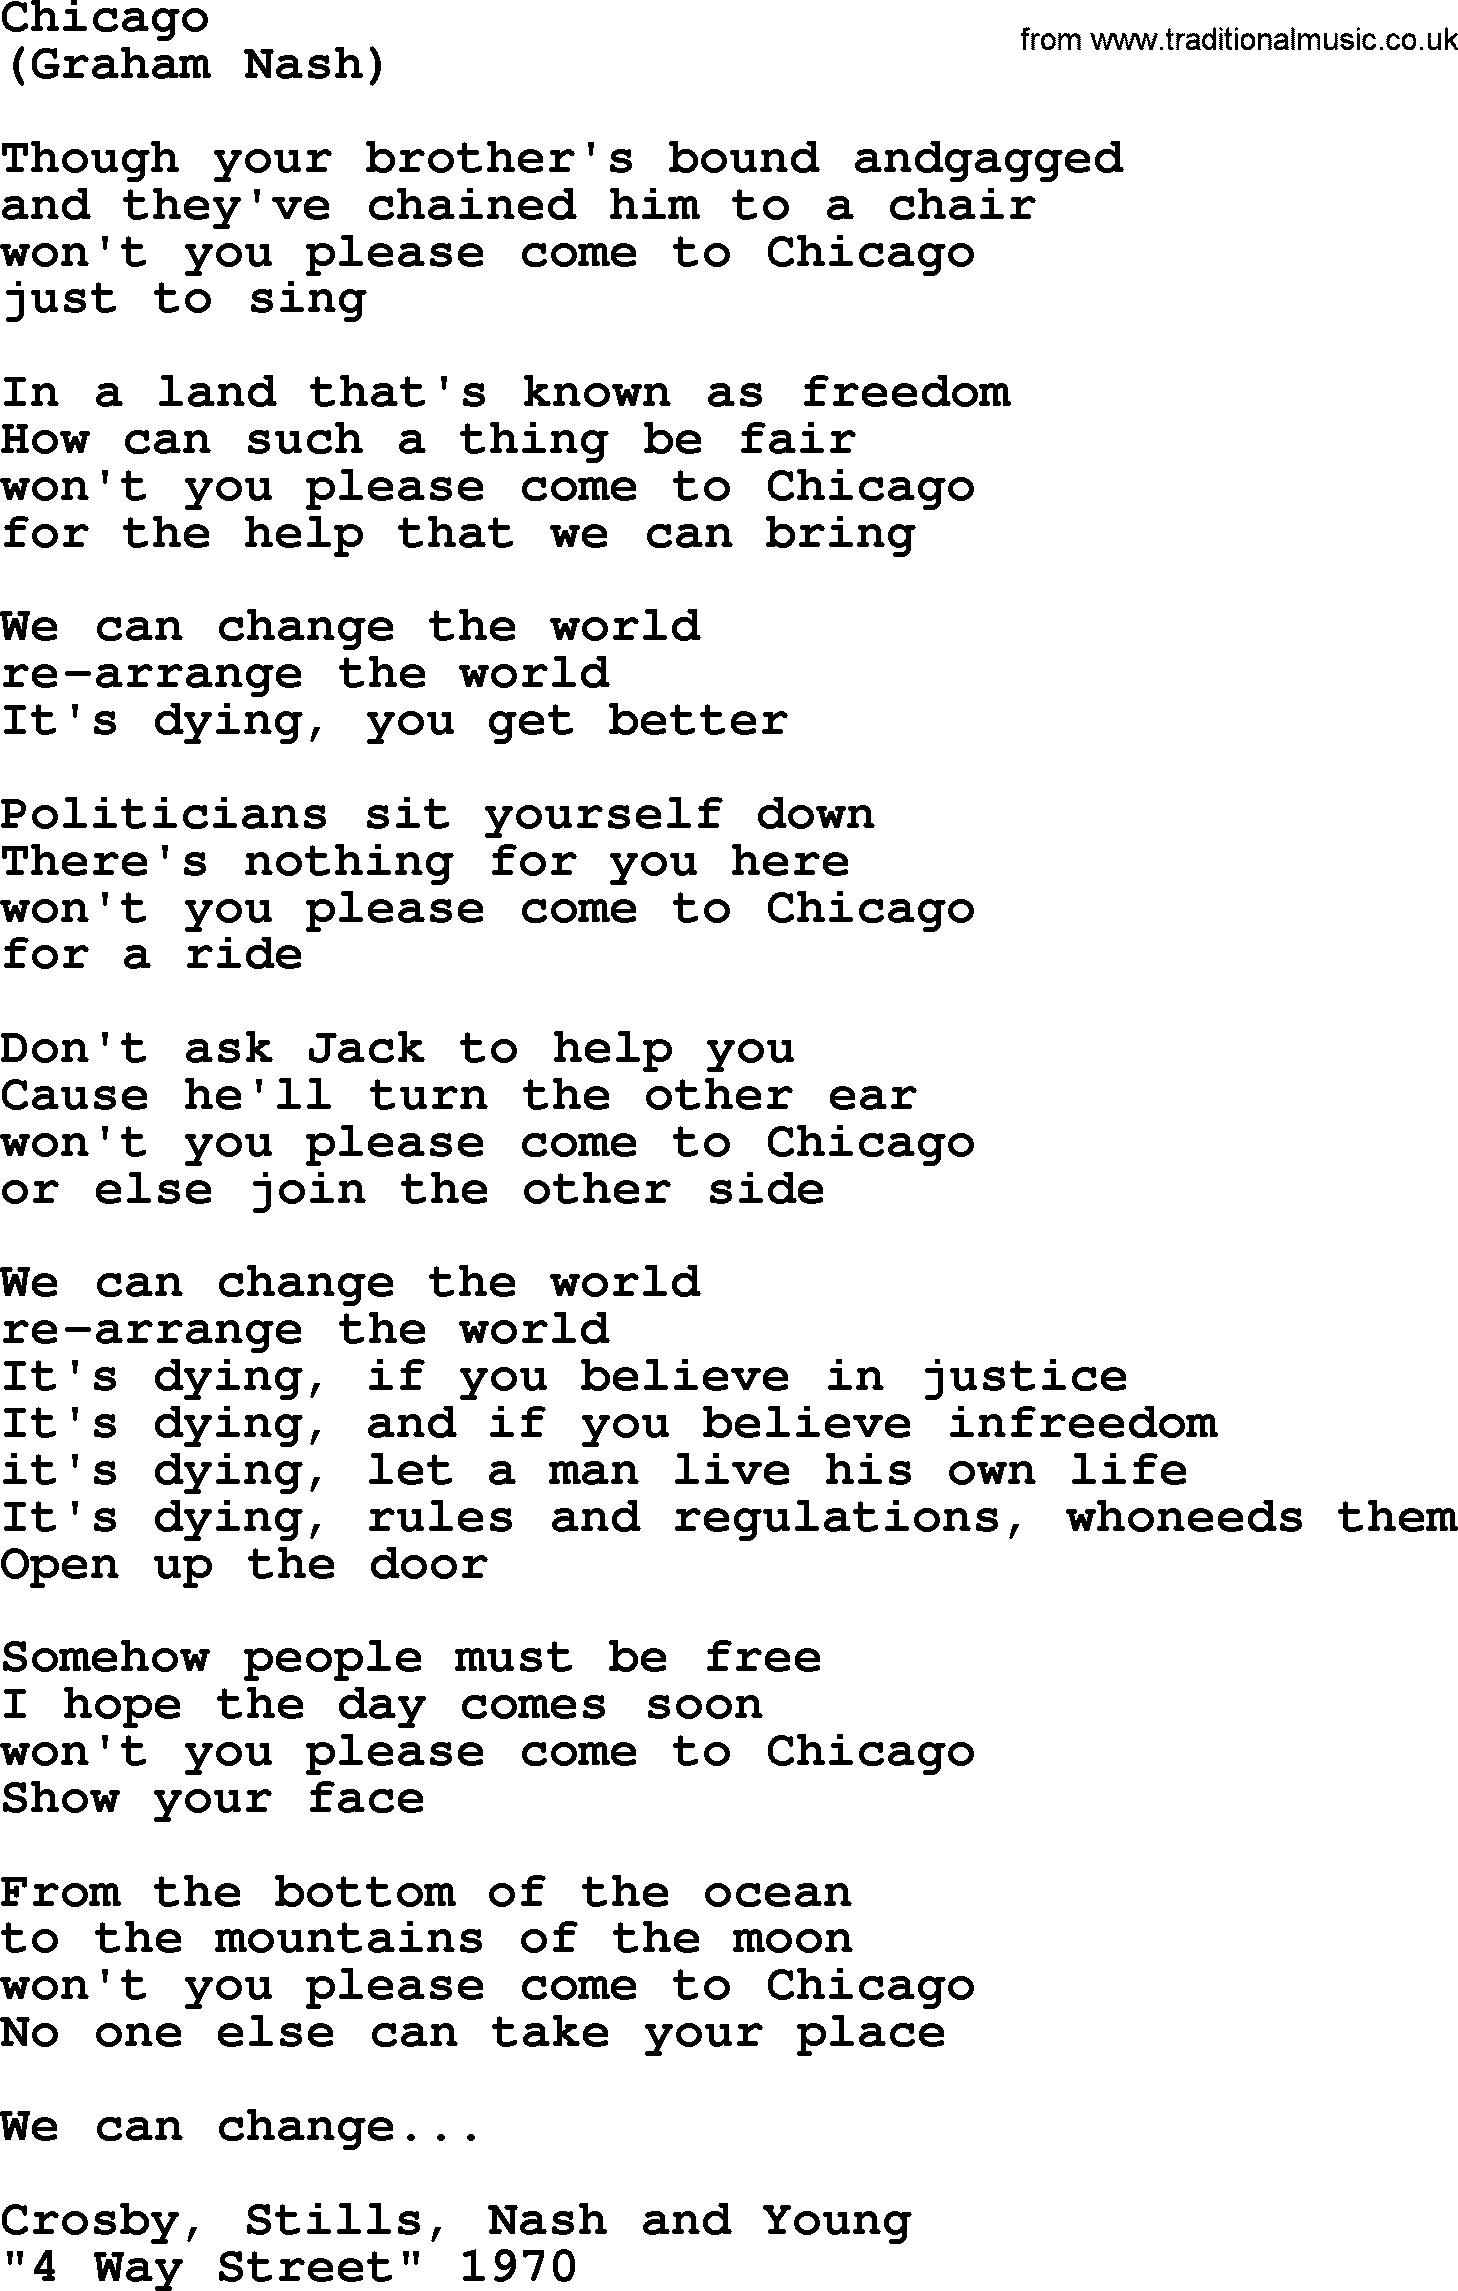 The Byrds song Chicago, lyrics